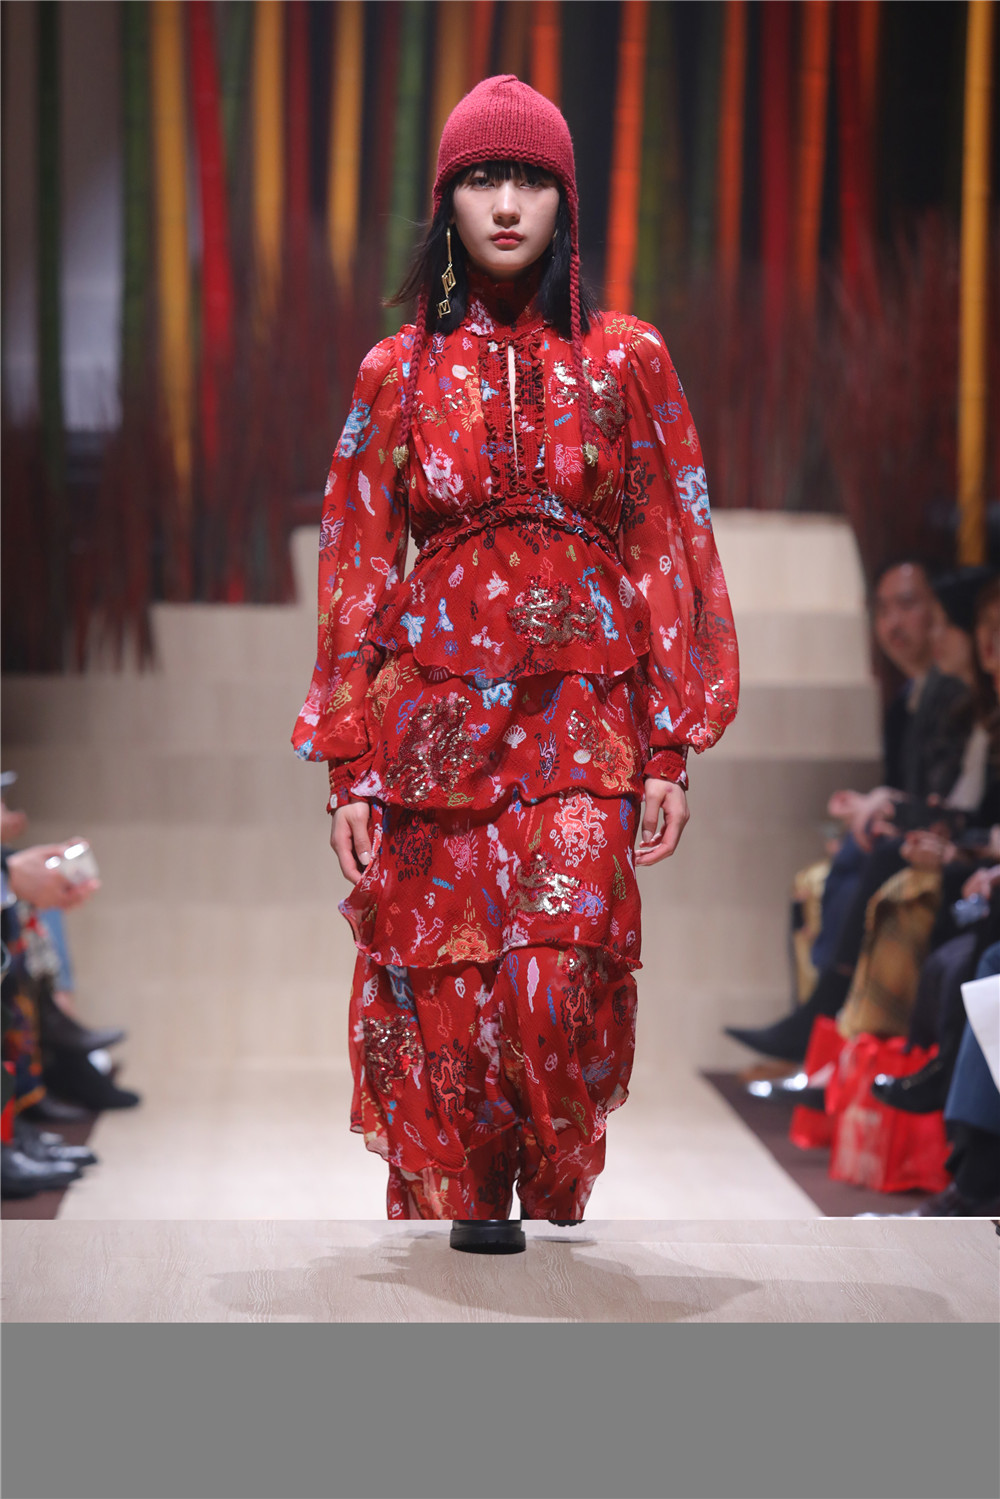 Vivienne Tam makes debut at Shanghai Fashion Week - Chinadaily.com.cn